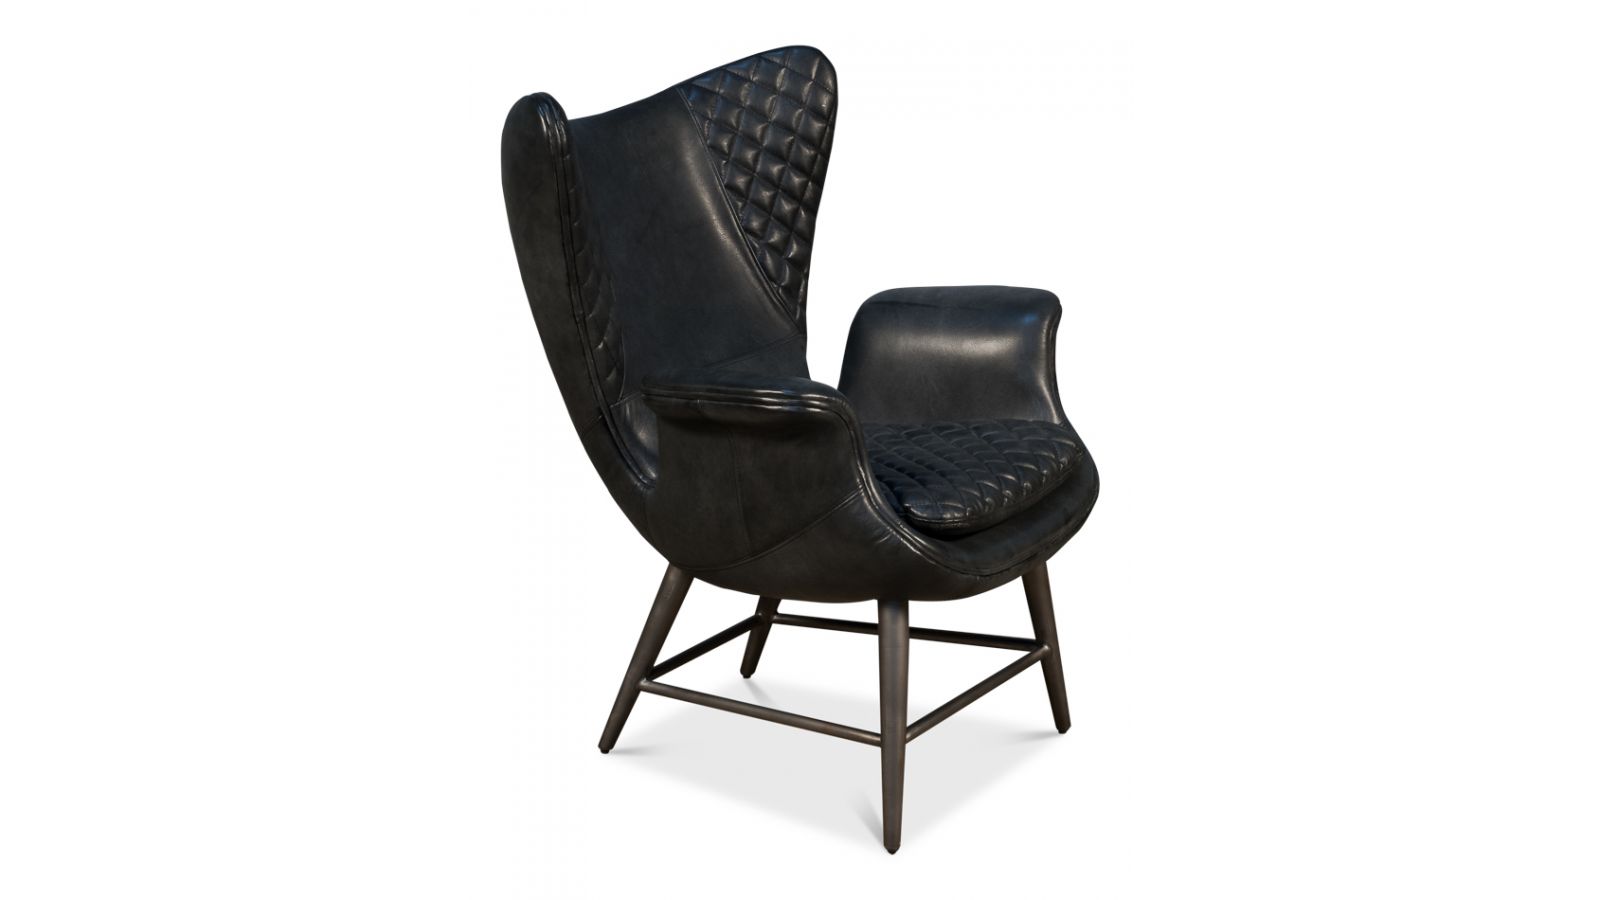 40862 Tudor Single Chair in Black Leather